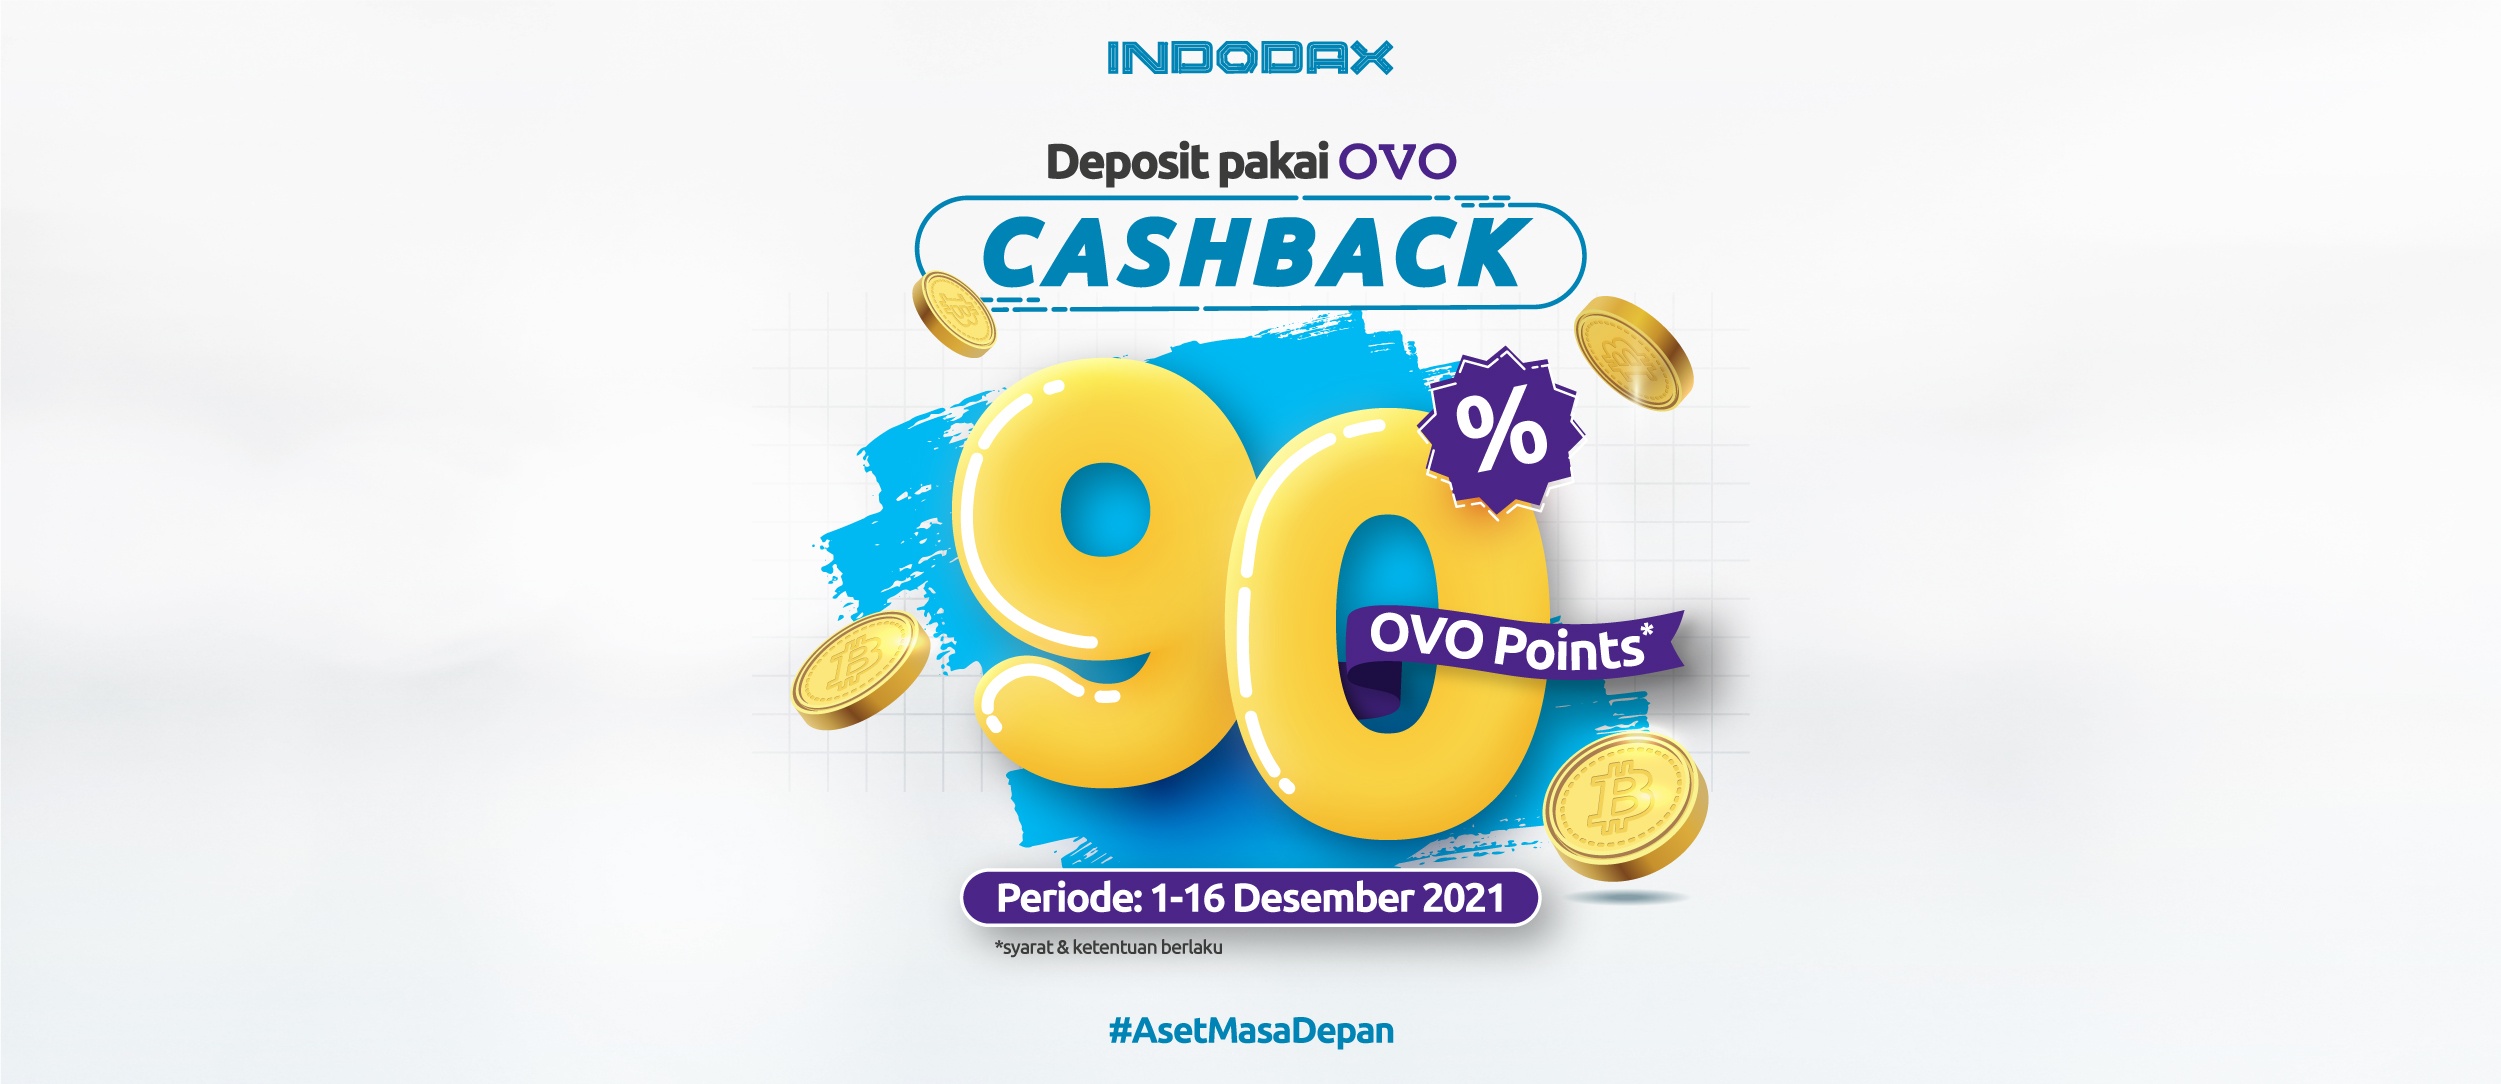 Deposit Pakai OVO Cashback 90%